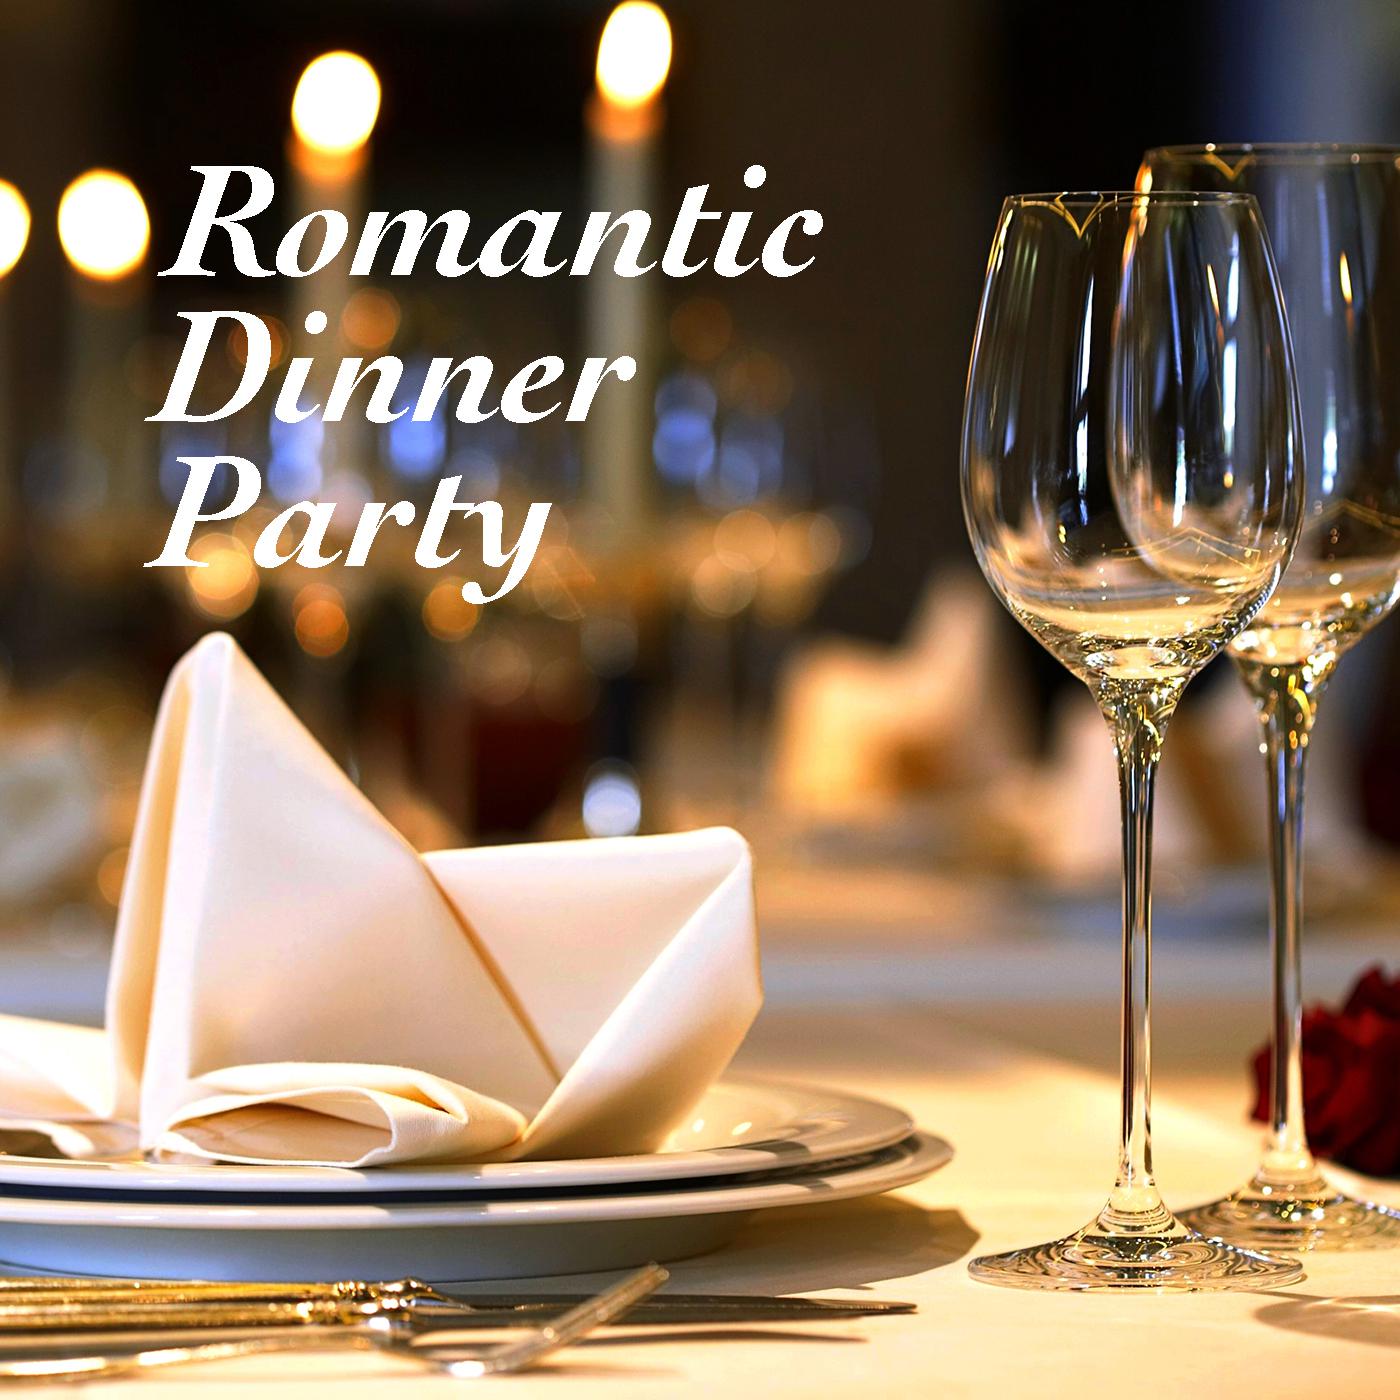 Romantic Dinner Party